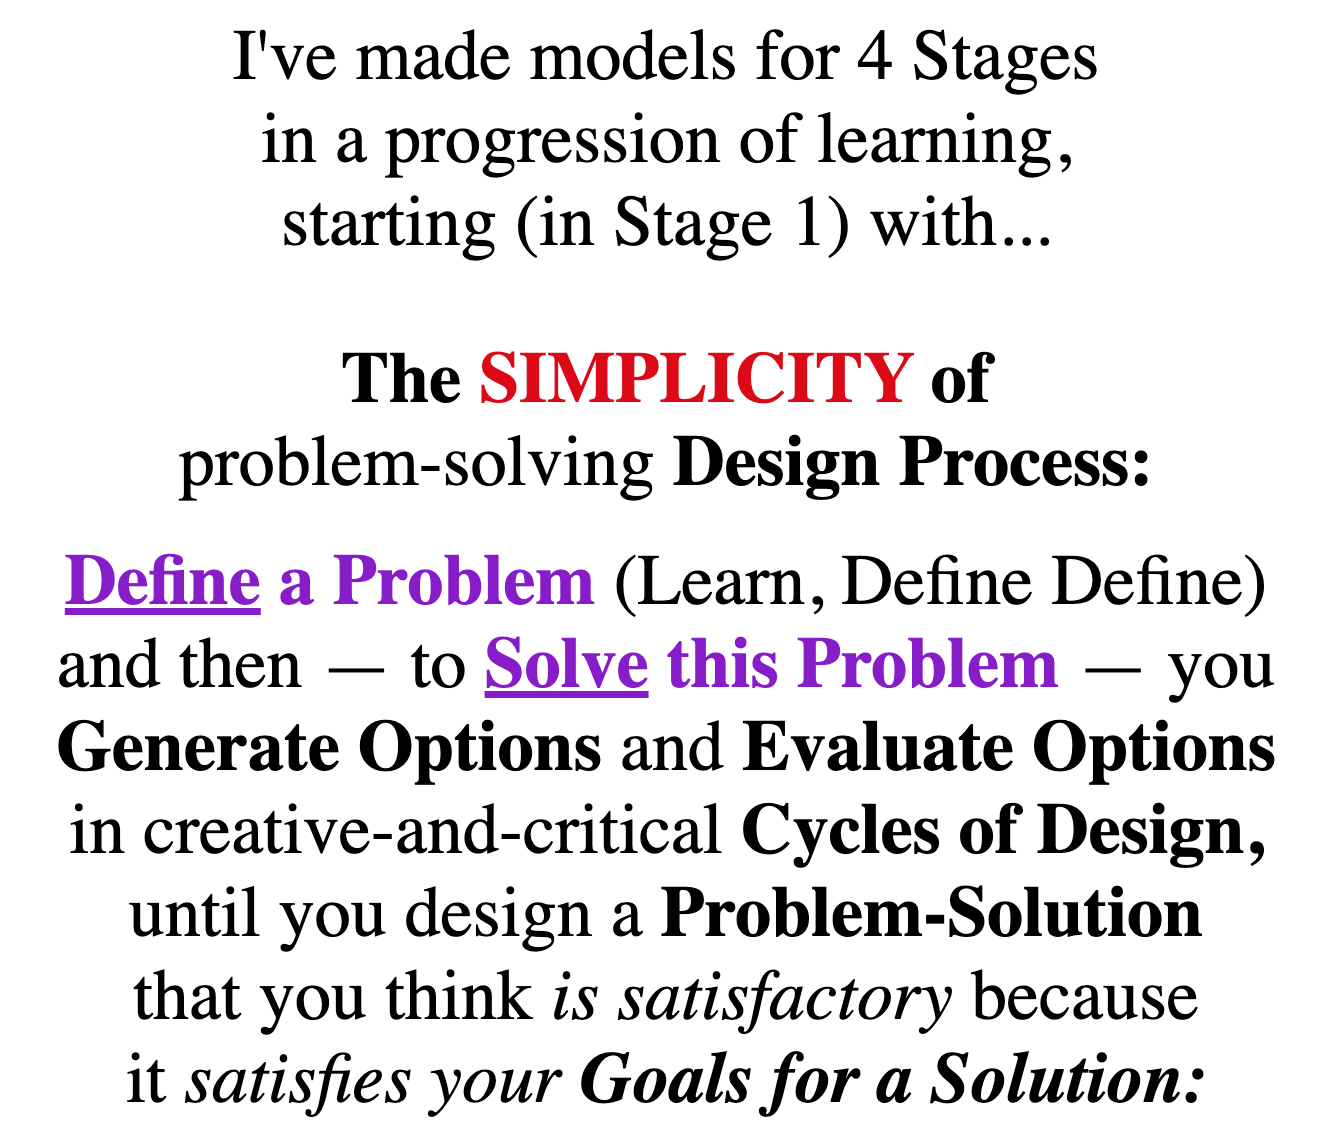 my Simplest Model - Understand, Define, Evaluate & Generate, Decide